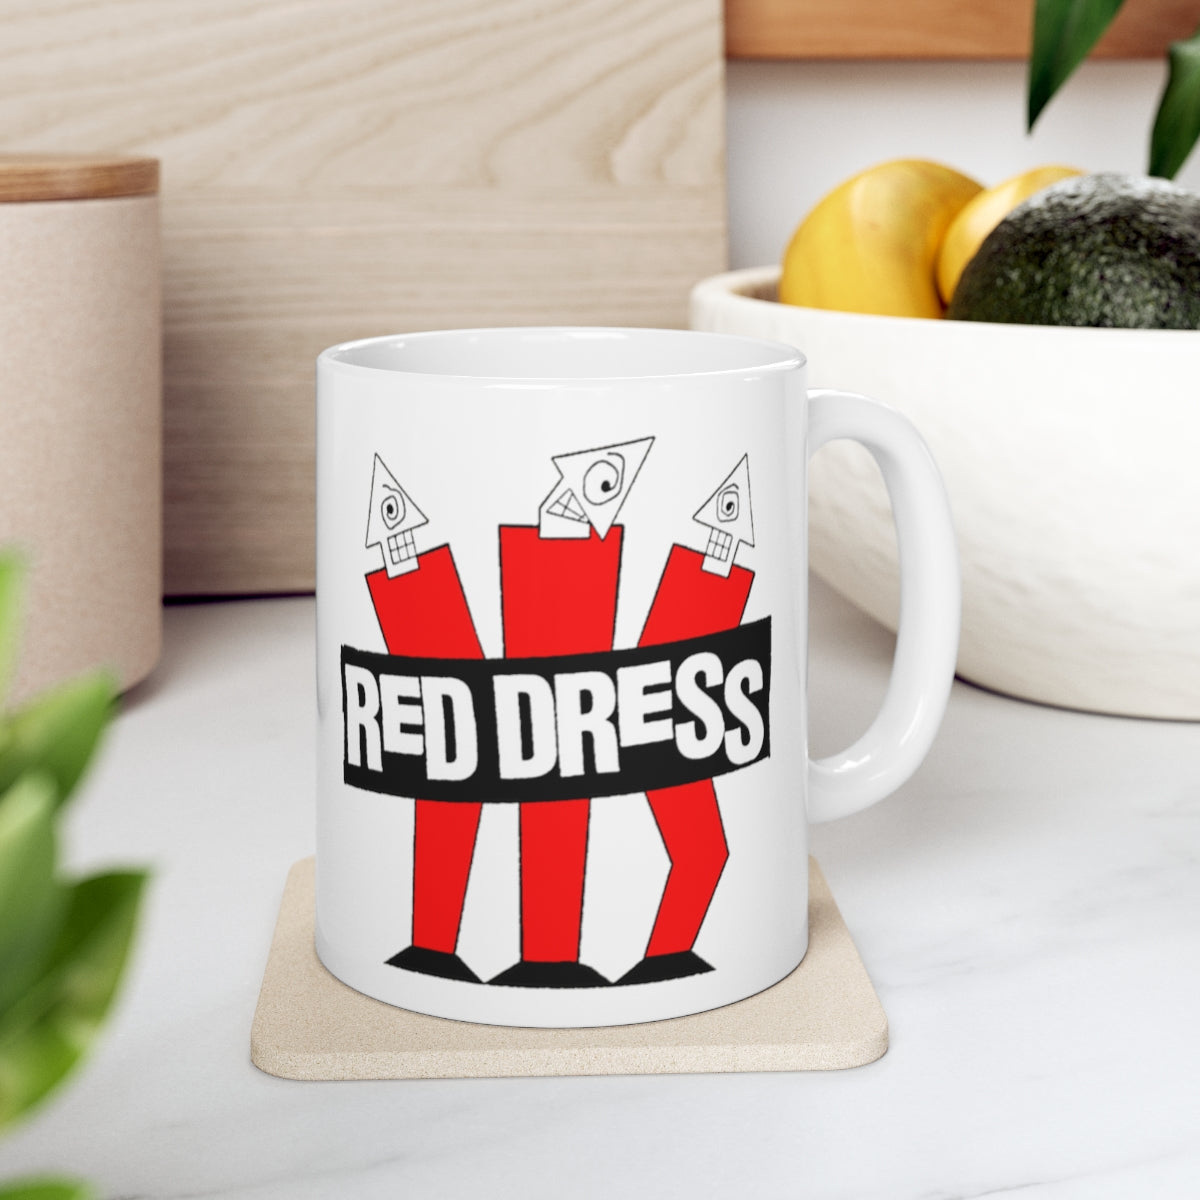 RED DRESS White Ceramic Mug